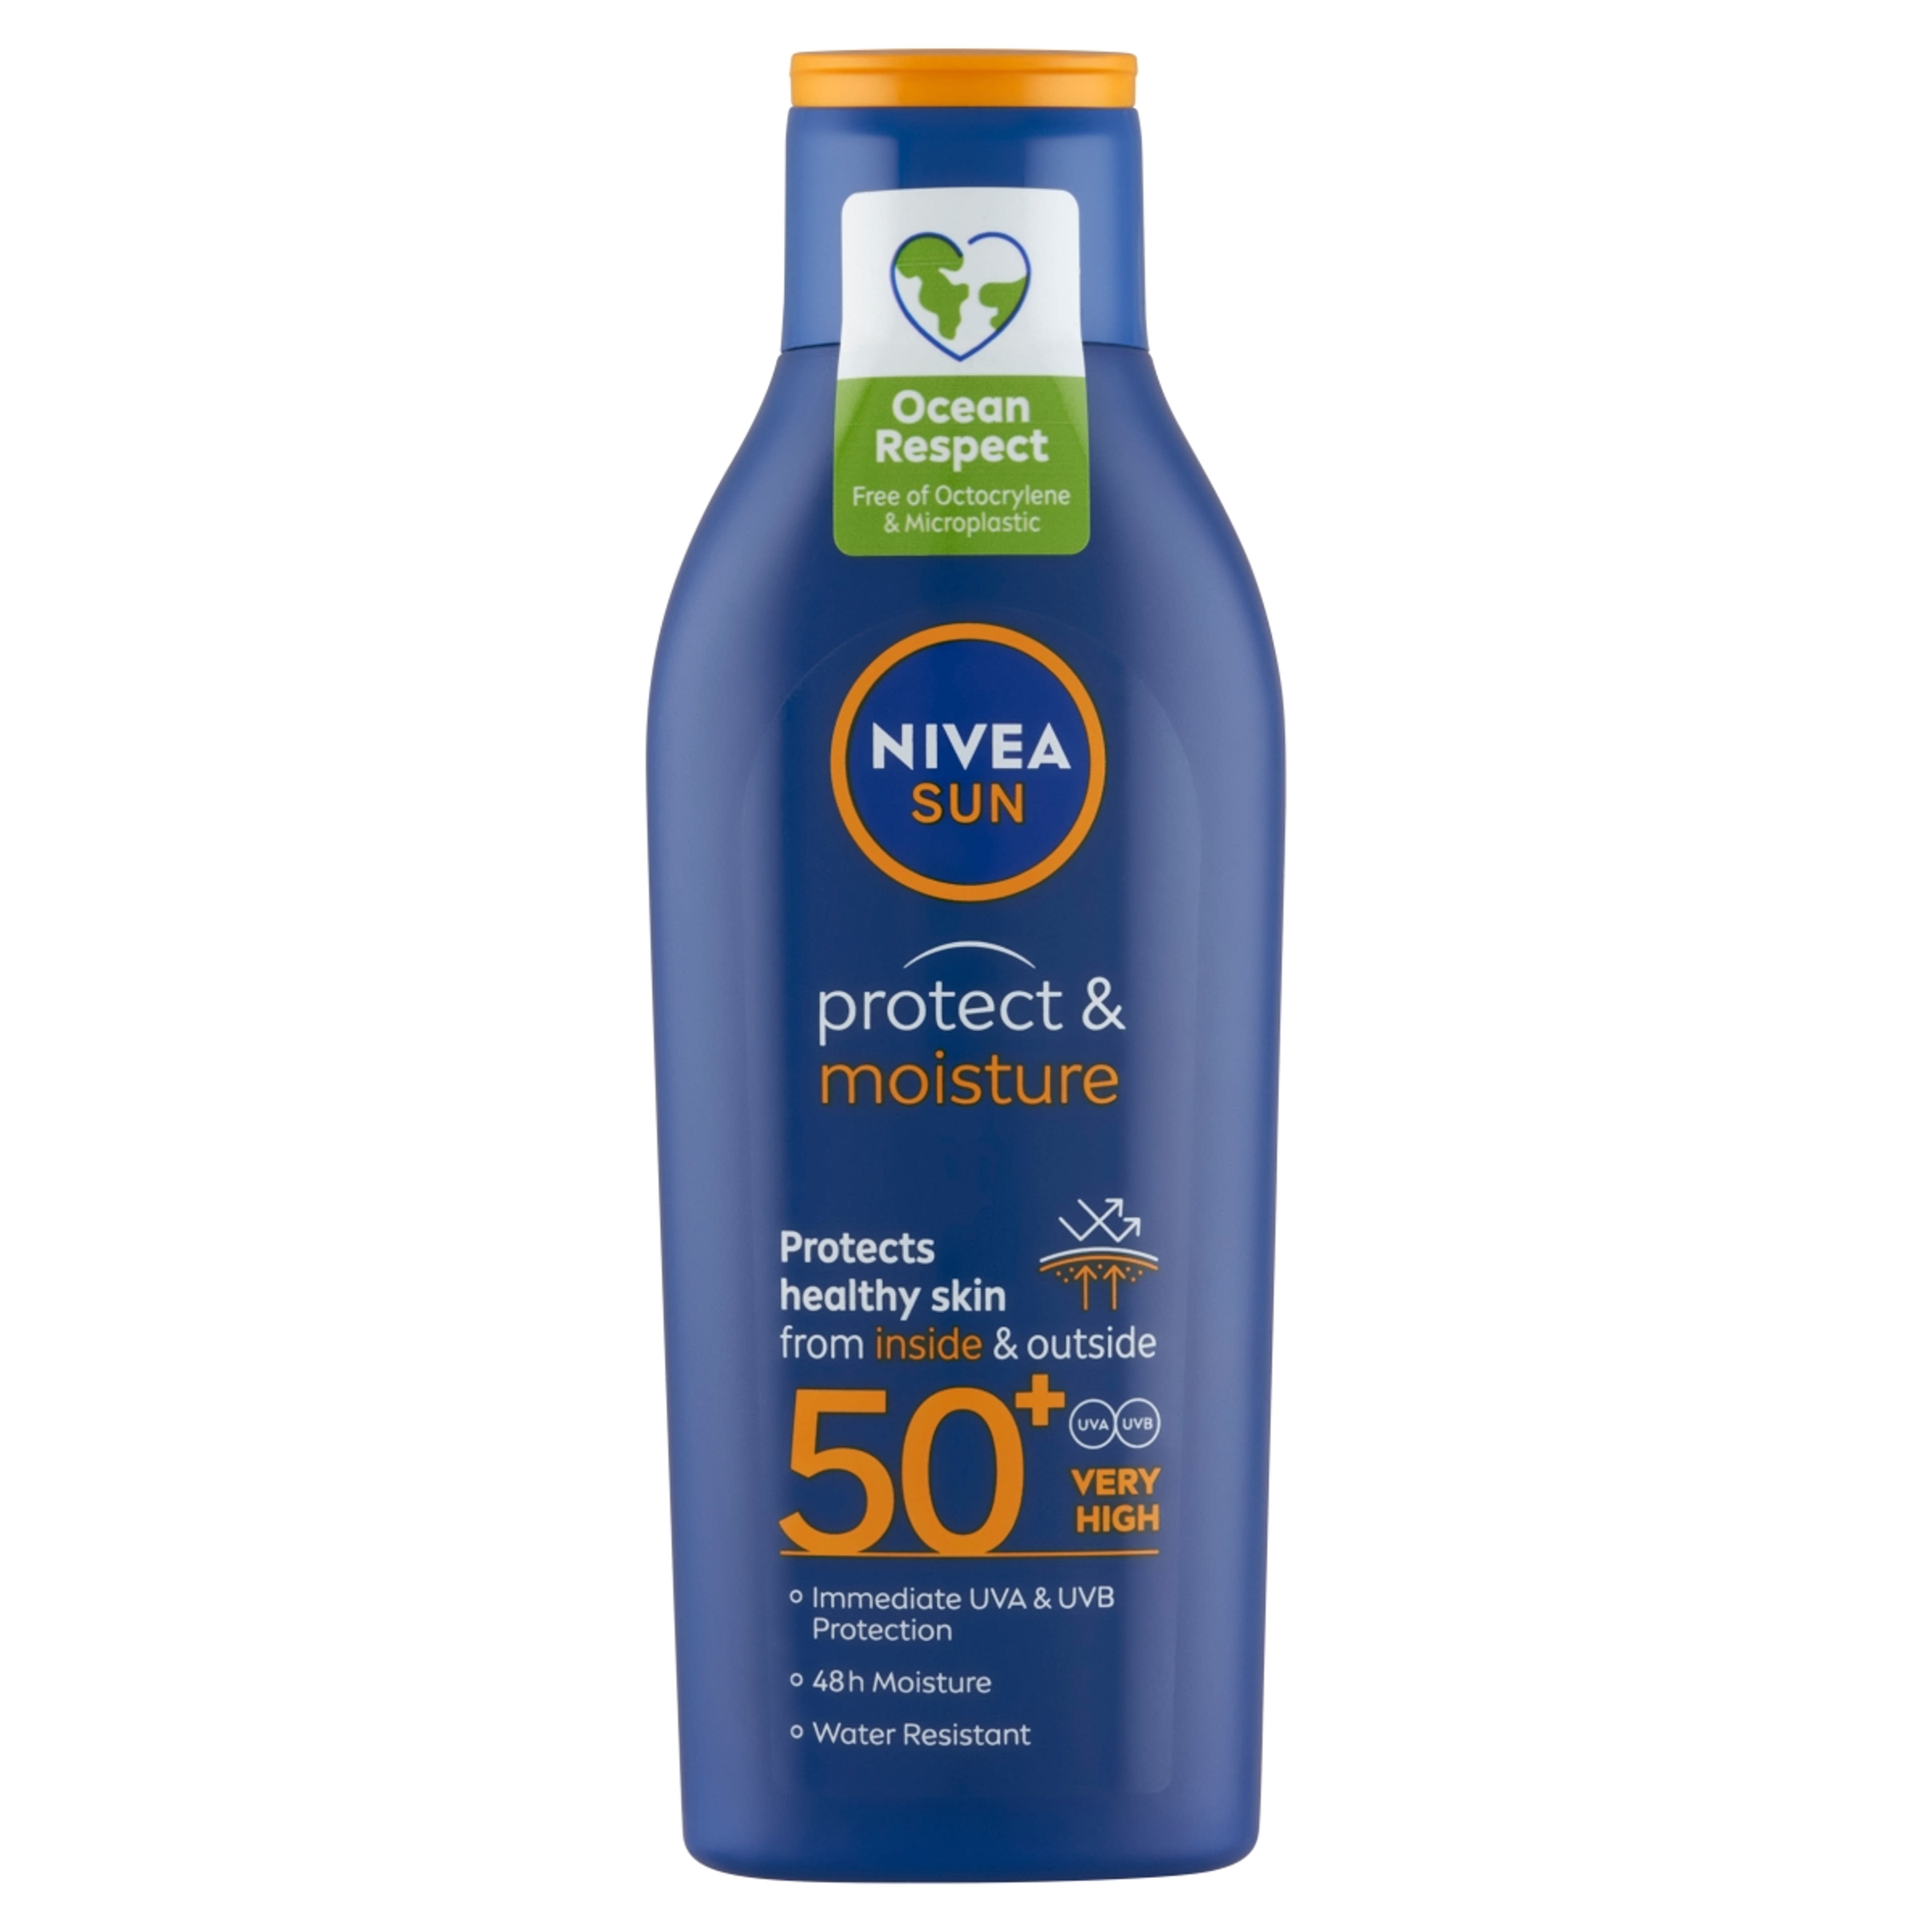 NIVEA SUN Protect & Moisture naptej FF50+ - 200 ml